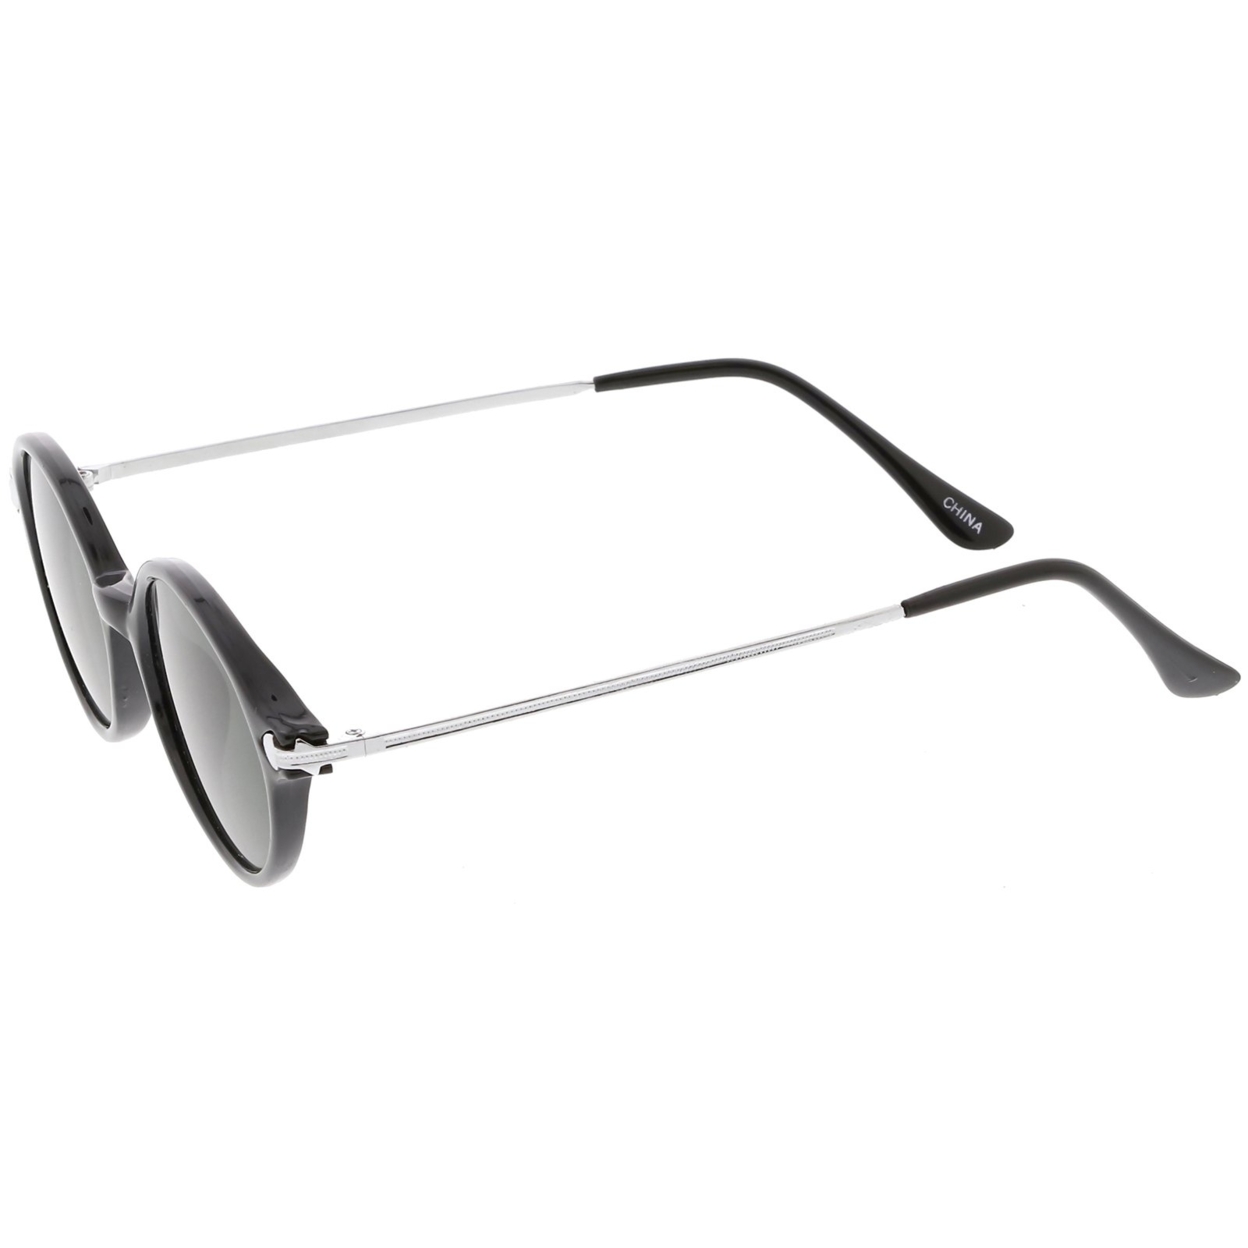 True Vintage Thin Arms Metal Detail Glass Lens Oval Sunglasses 48mm - Black Silver / Smoke